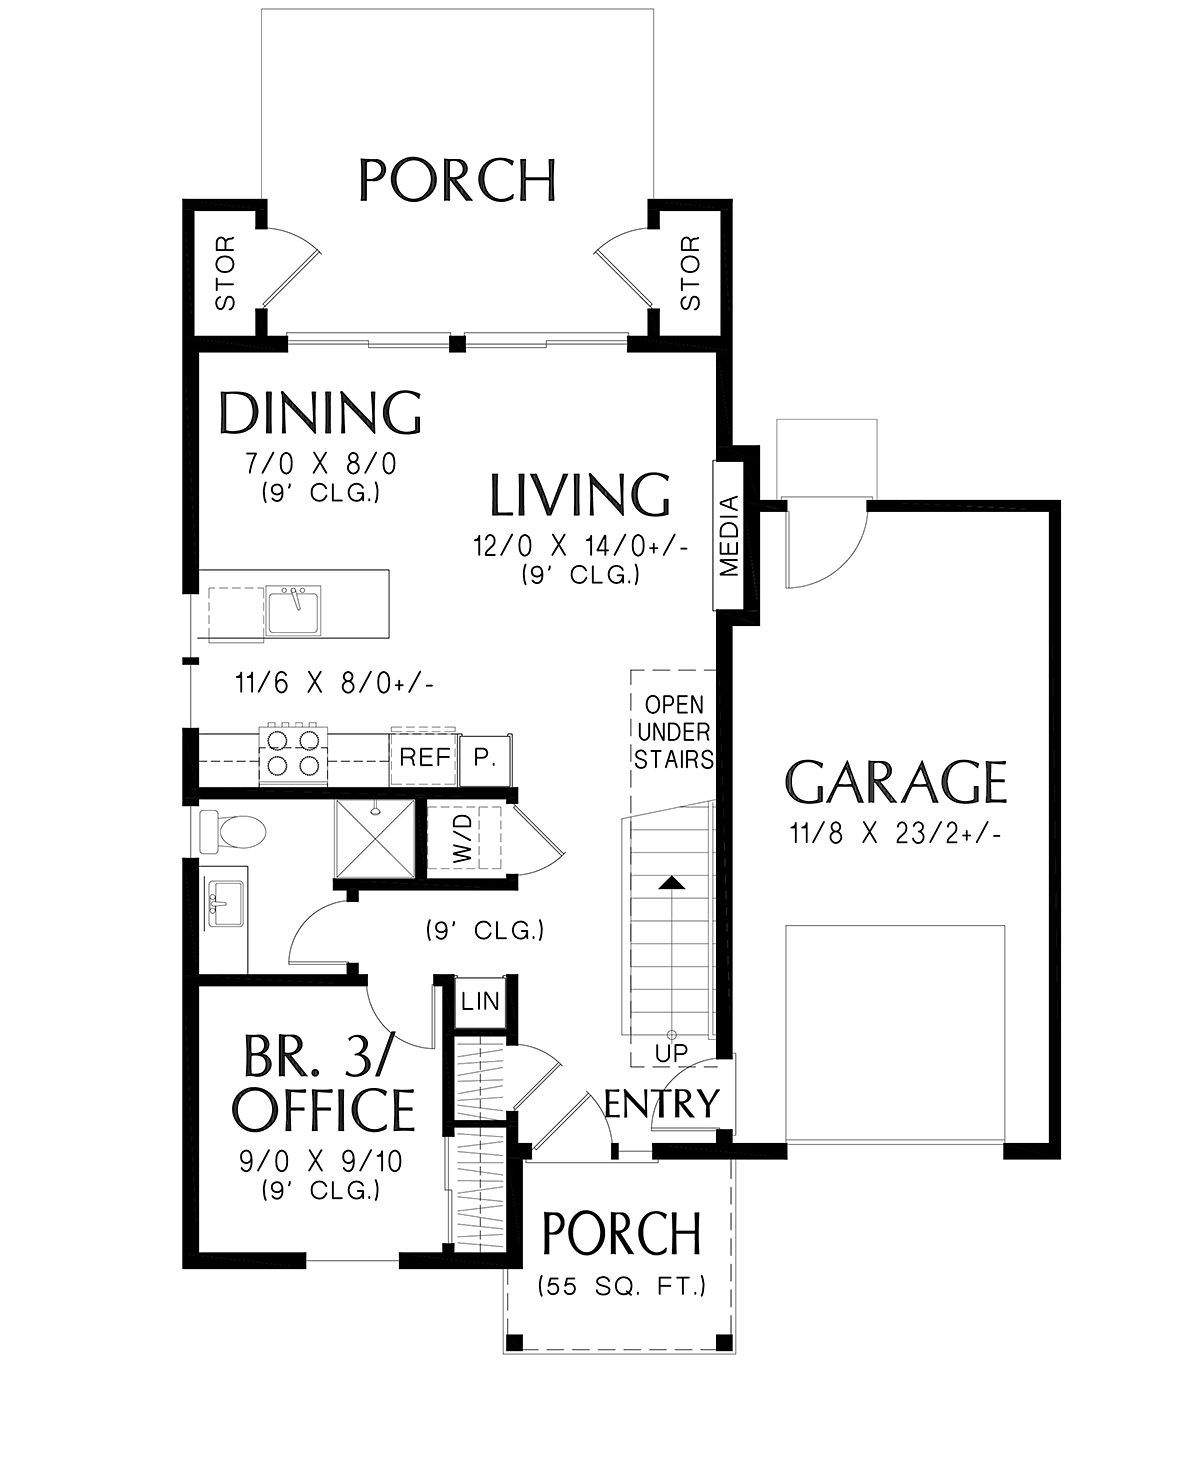 House Plan 81385 Alternate Level One